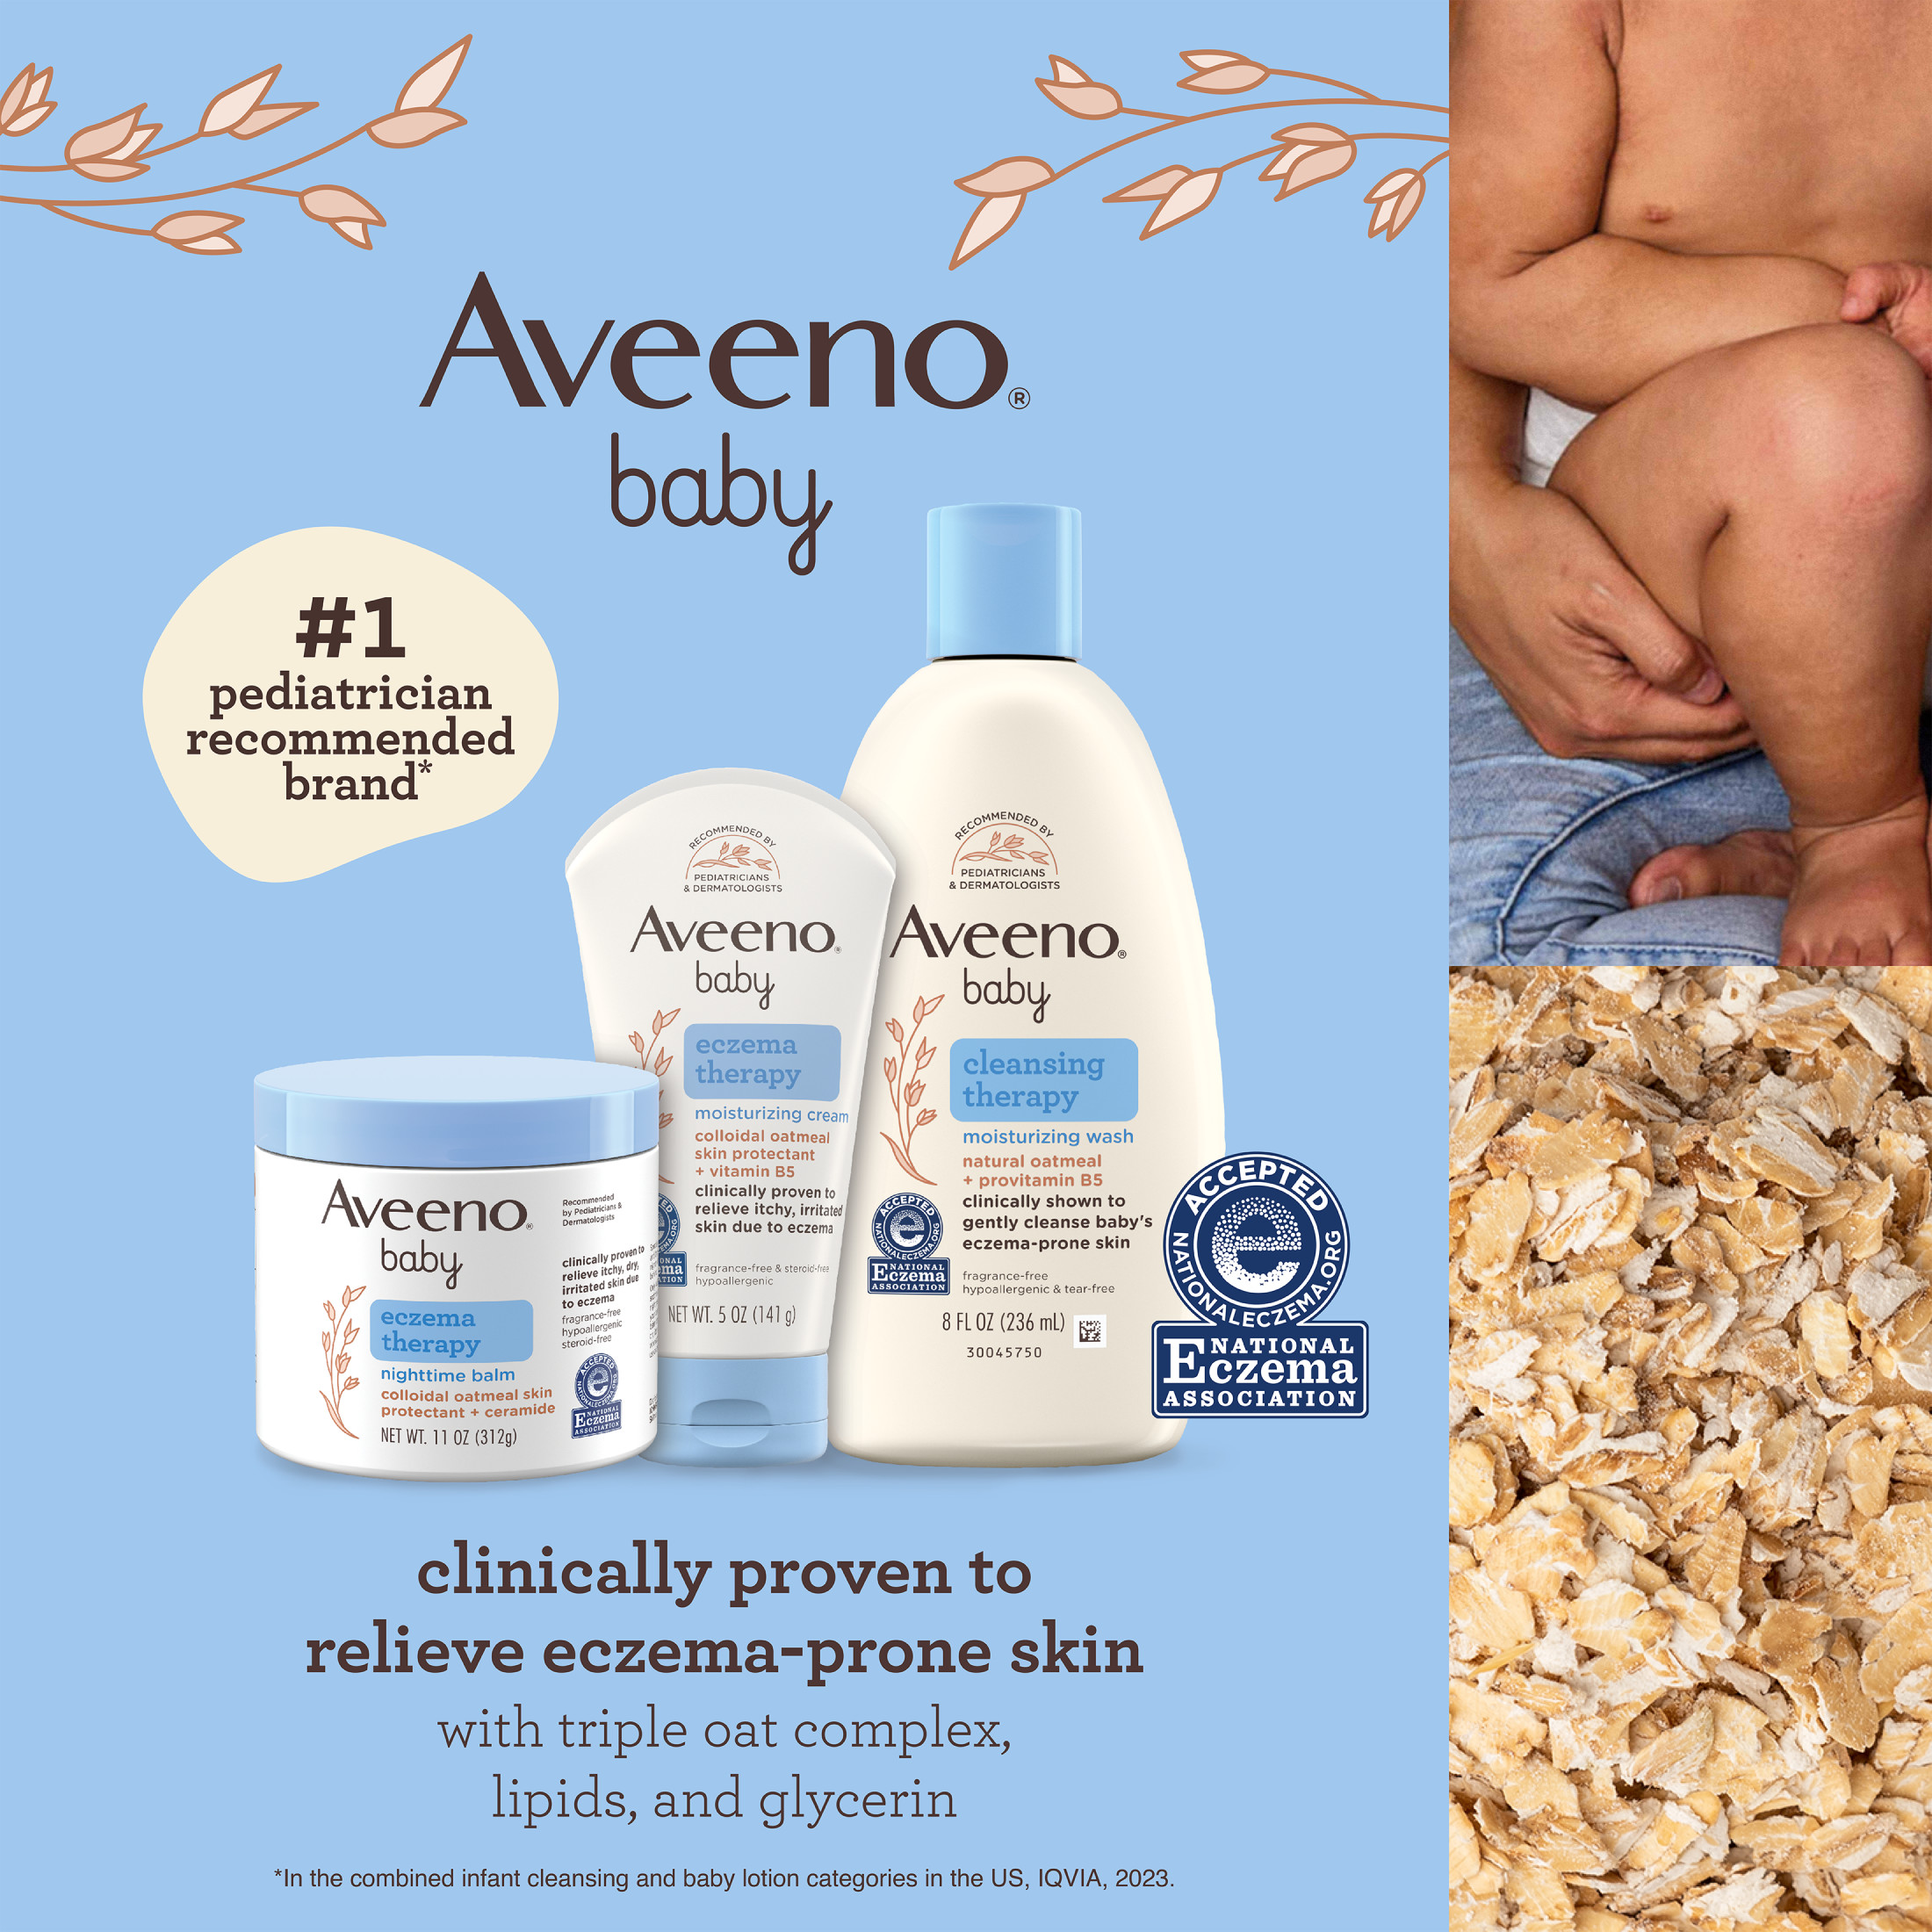 Aveeno Baby Eczema Therapy Moisturizing Cream Body Lotion with Oatmeal, 5 oz - image 5 of 9